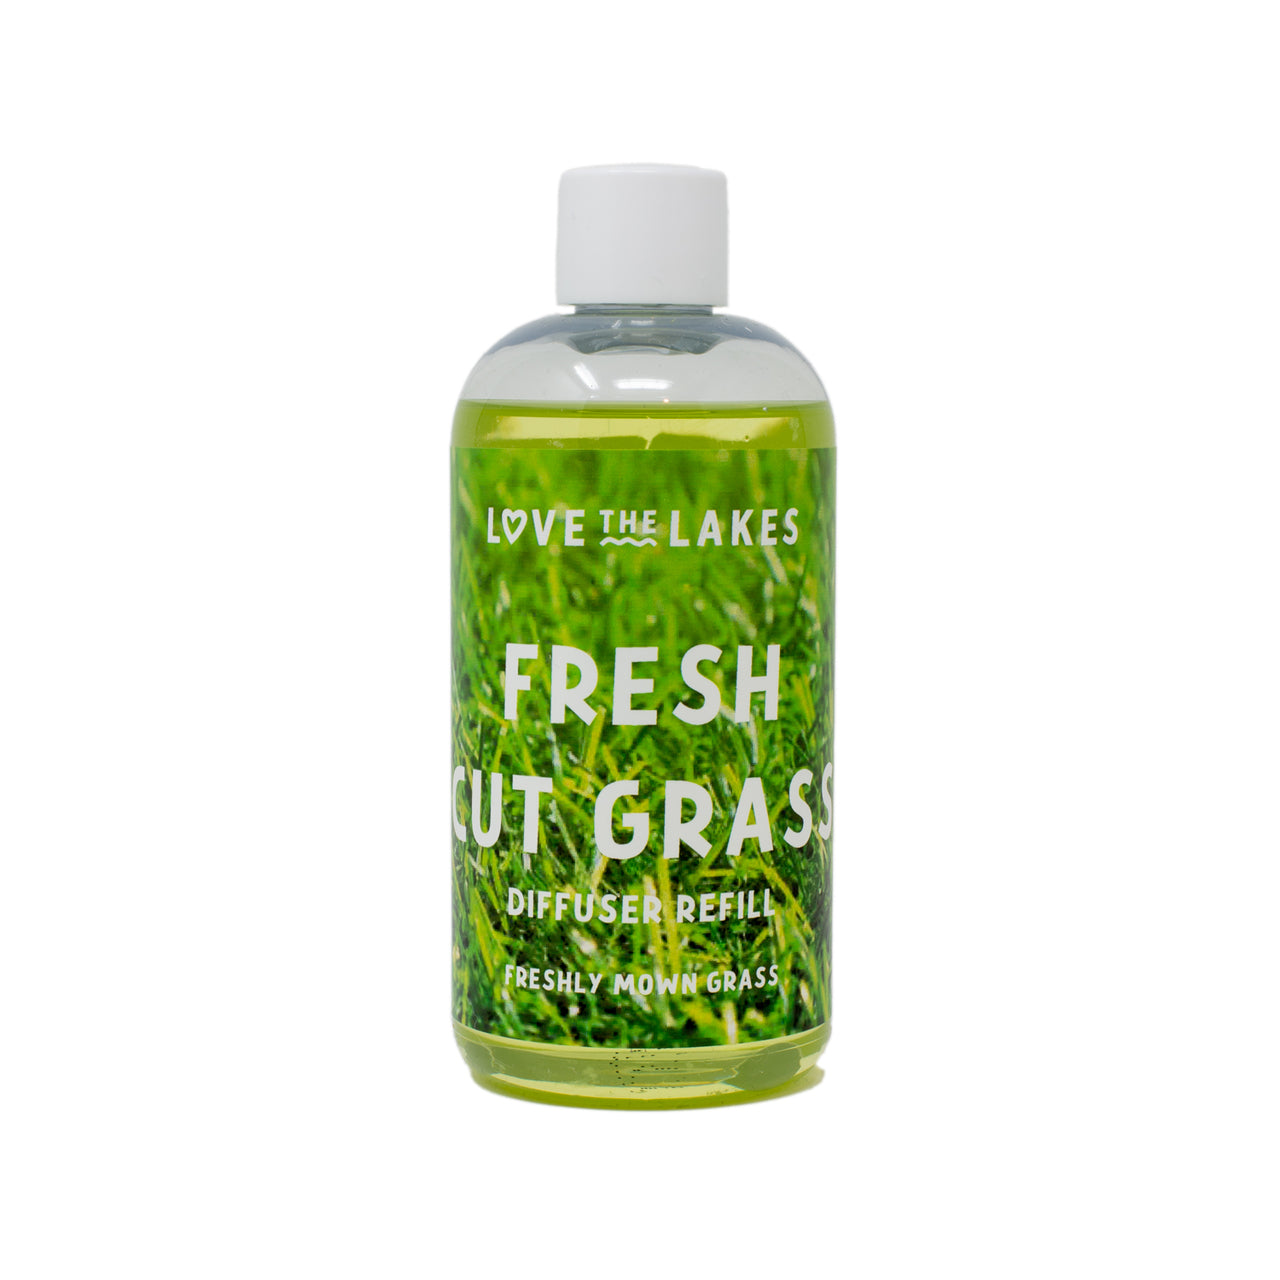 Love the Lakes Fresh Cut Grass 200ml Reed Diffuser Refill